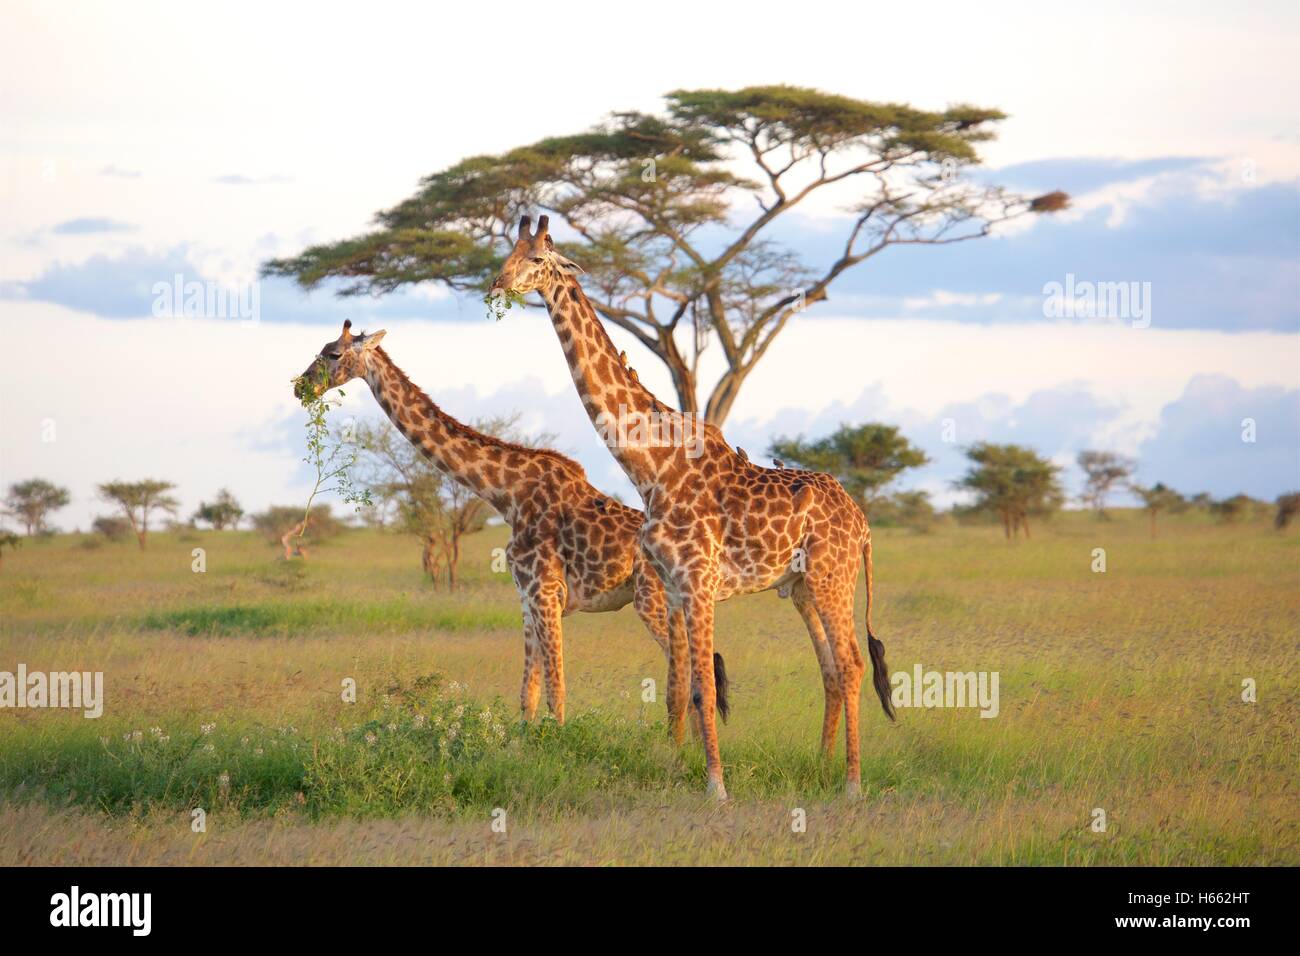 Viewing wild giraffe on safari in Serengeti National Park, Tanzania. Stock Photo